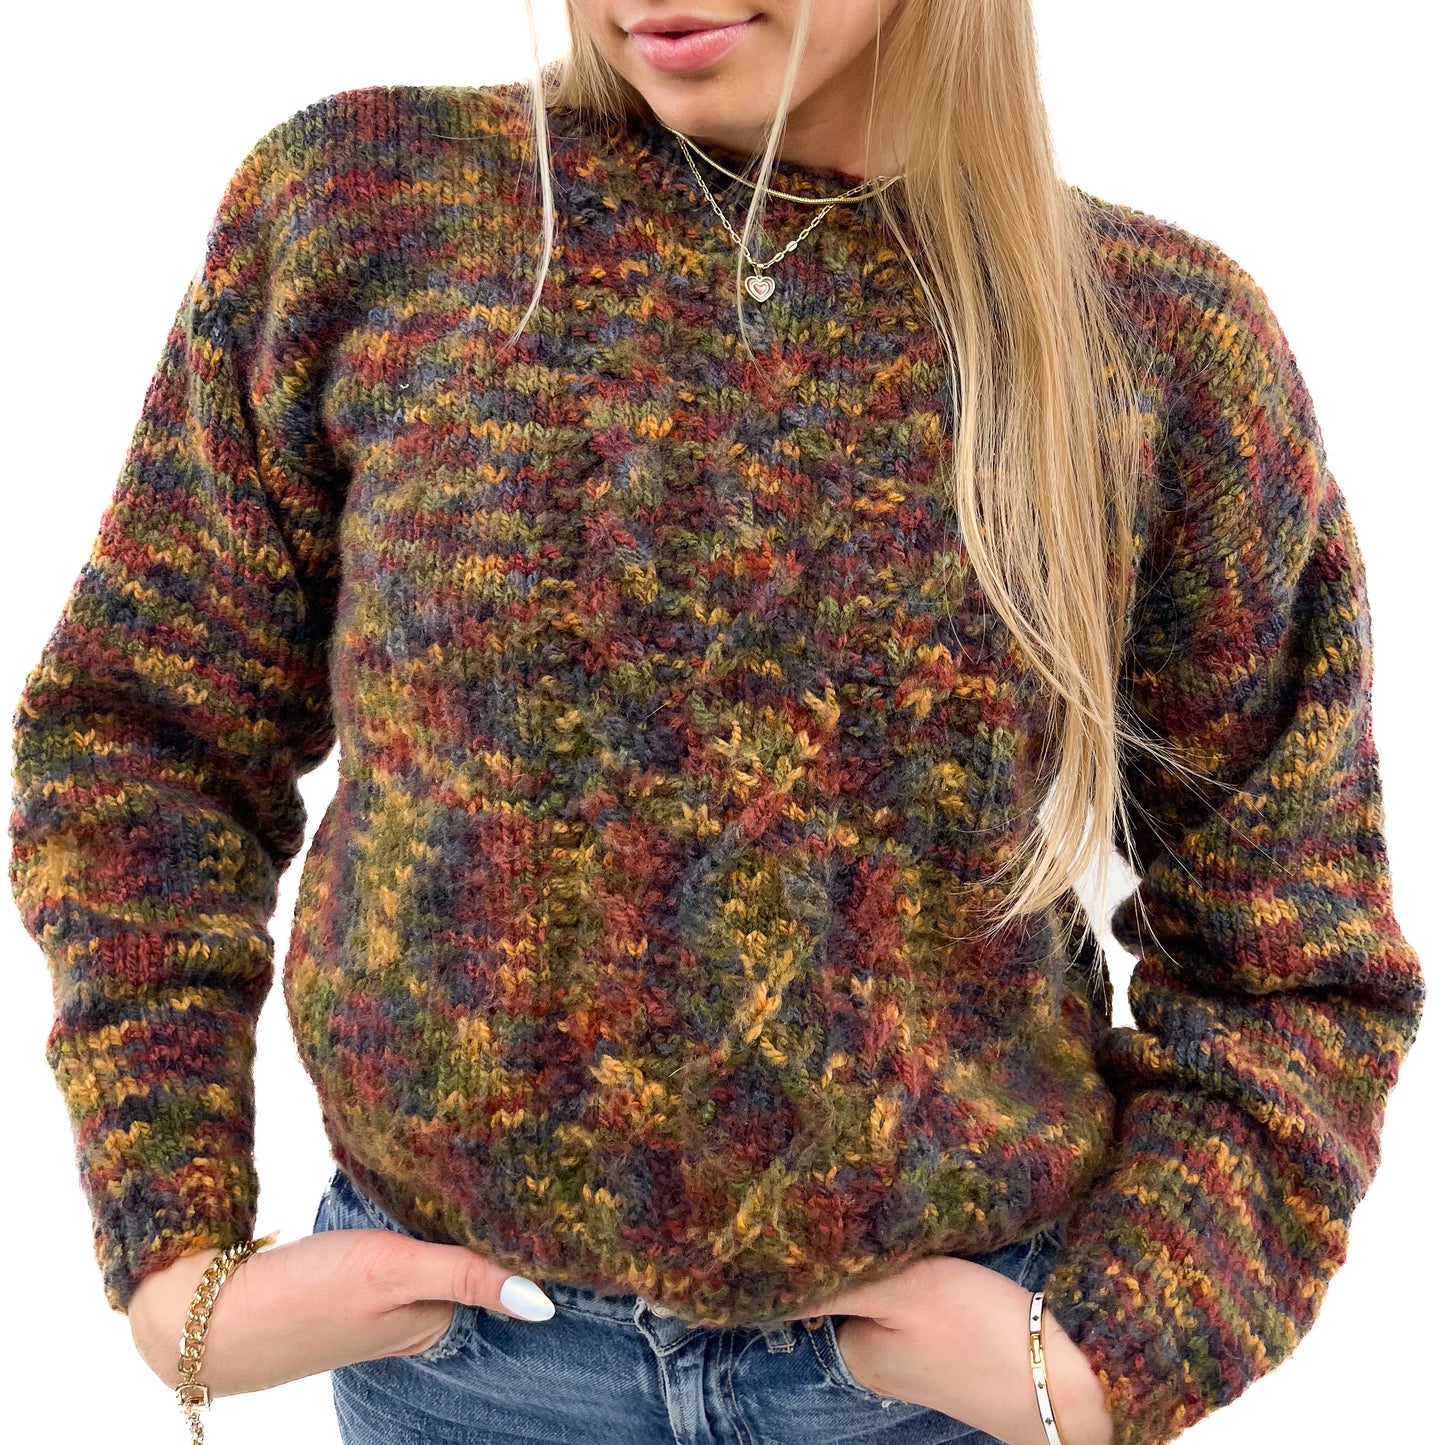 90s Sweater